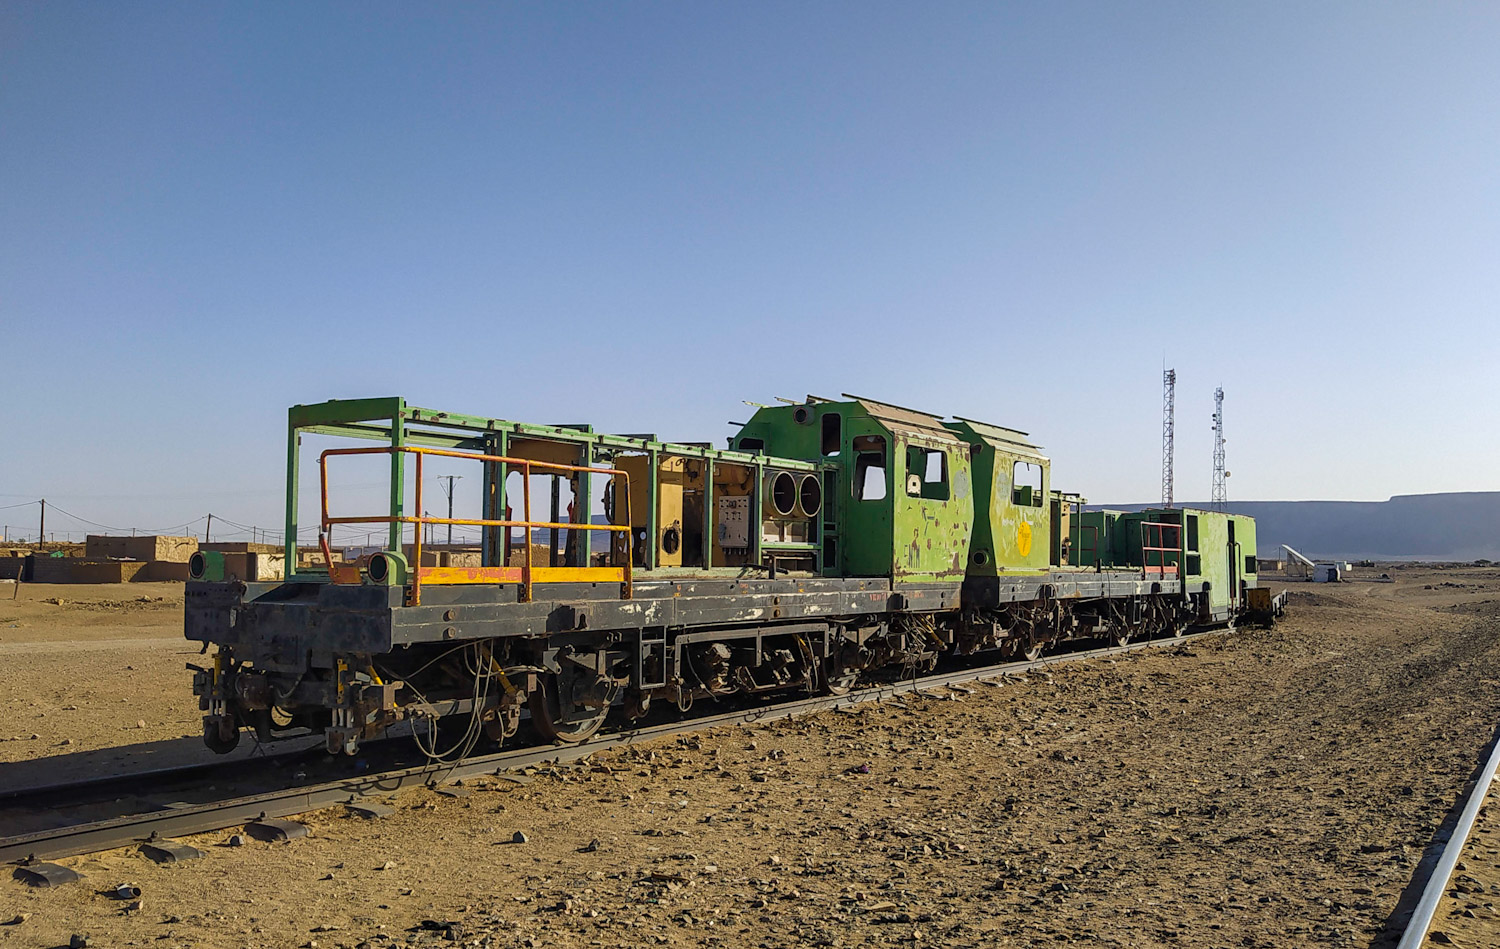 Mauritania Railway — Stations & ways